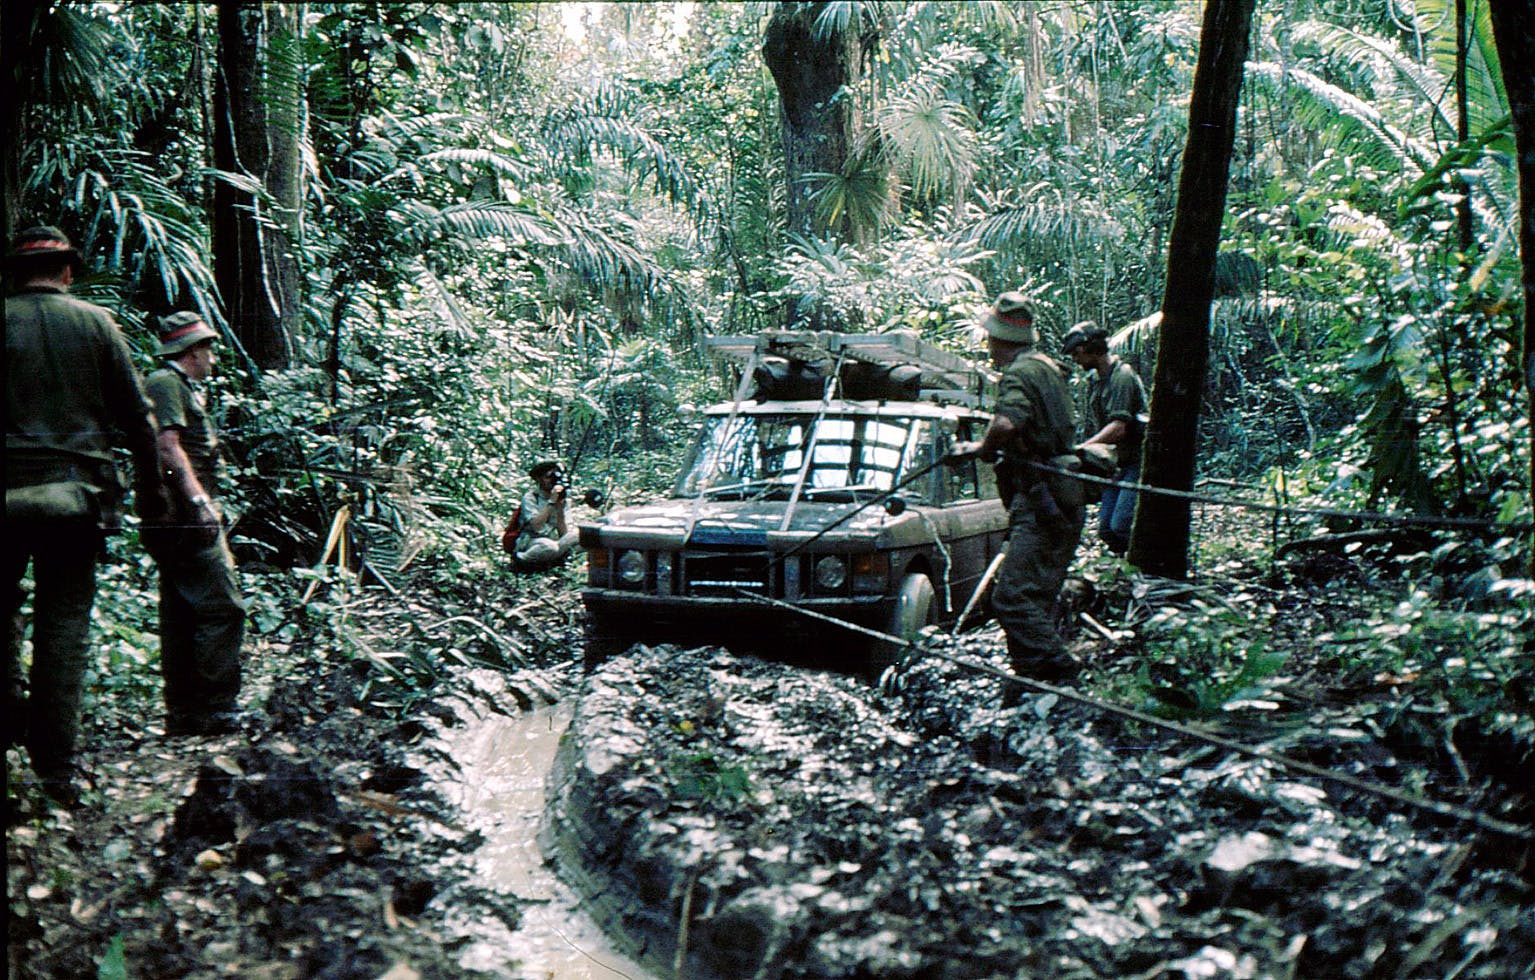 1972 land rover range rover darien gap jungle mud